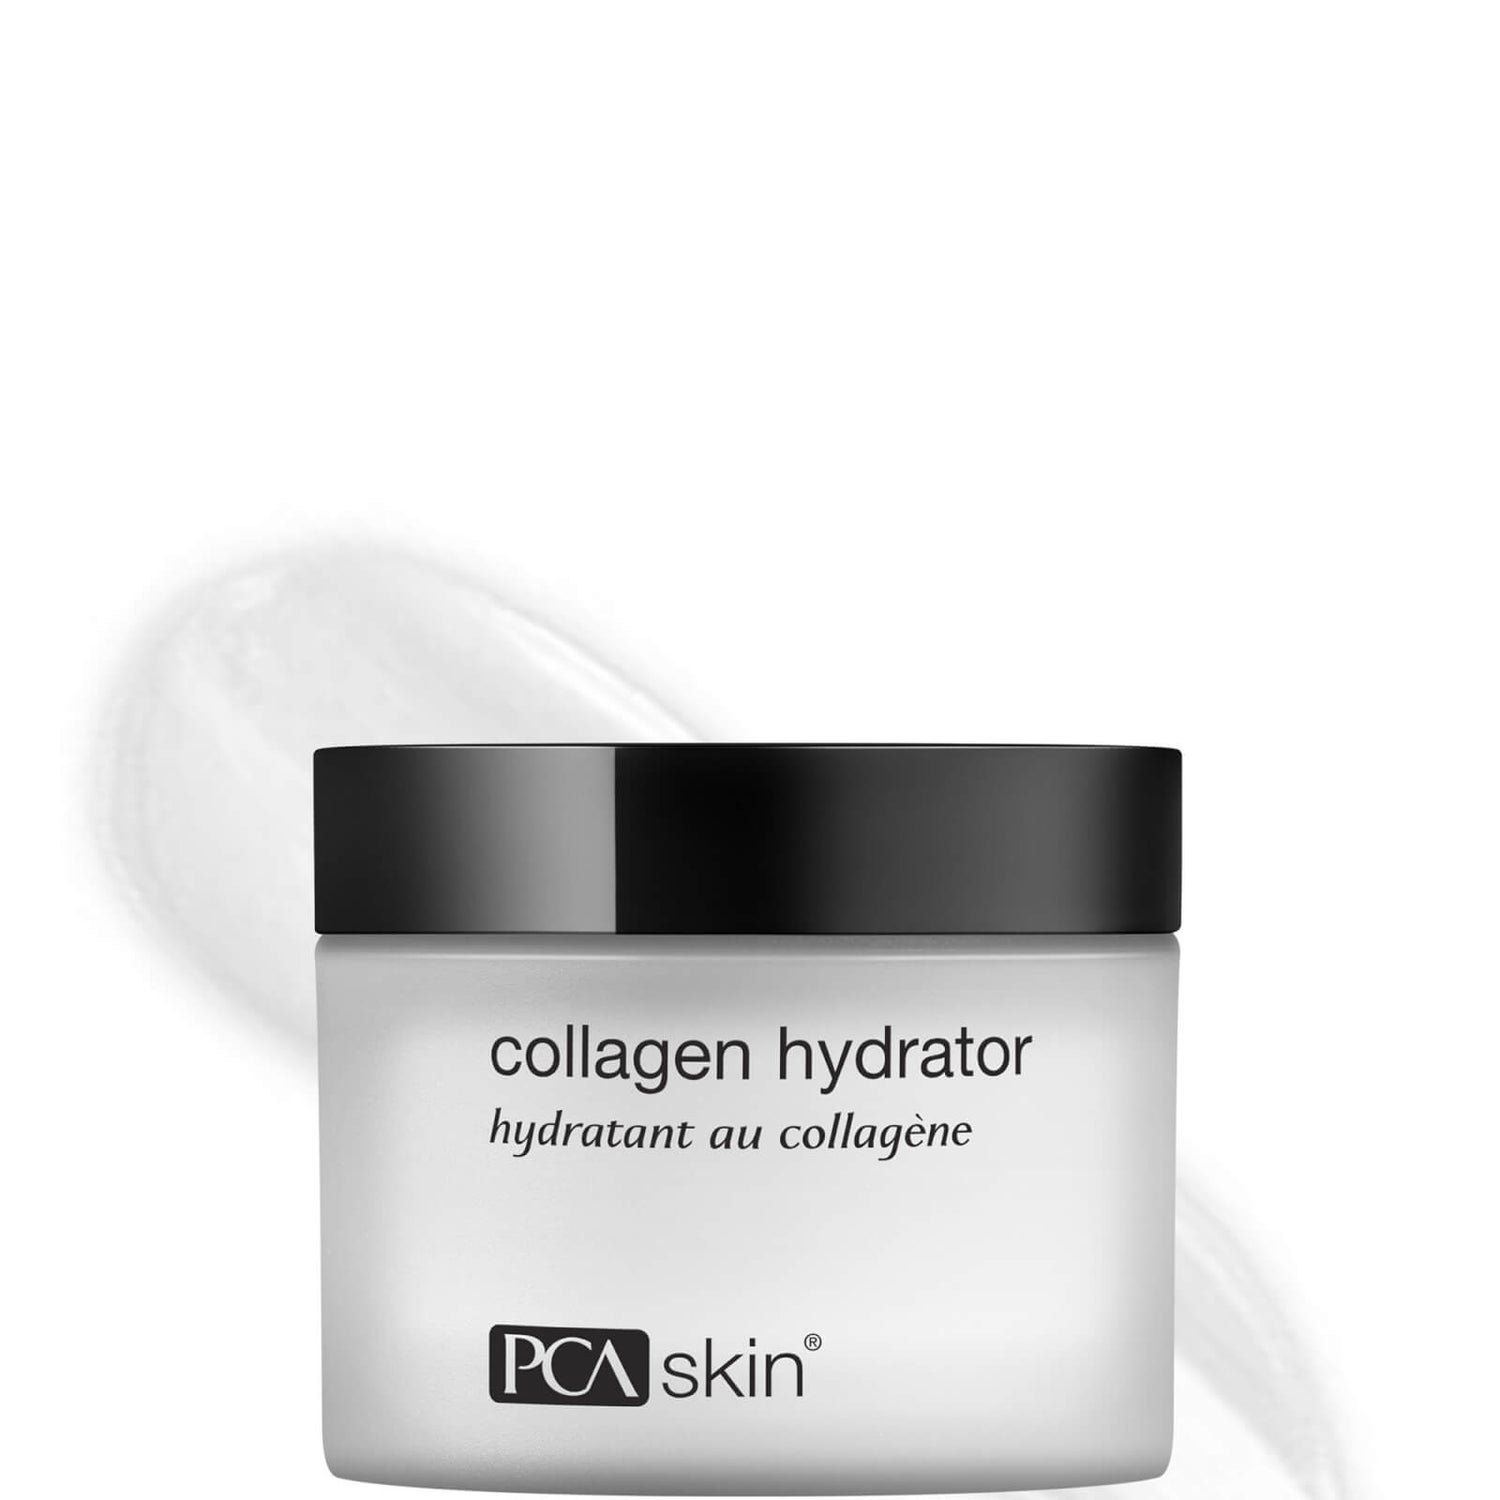 PCA SKIN Collagen Hydrator (1.7 oz.)